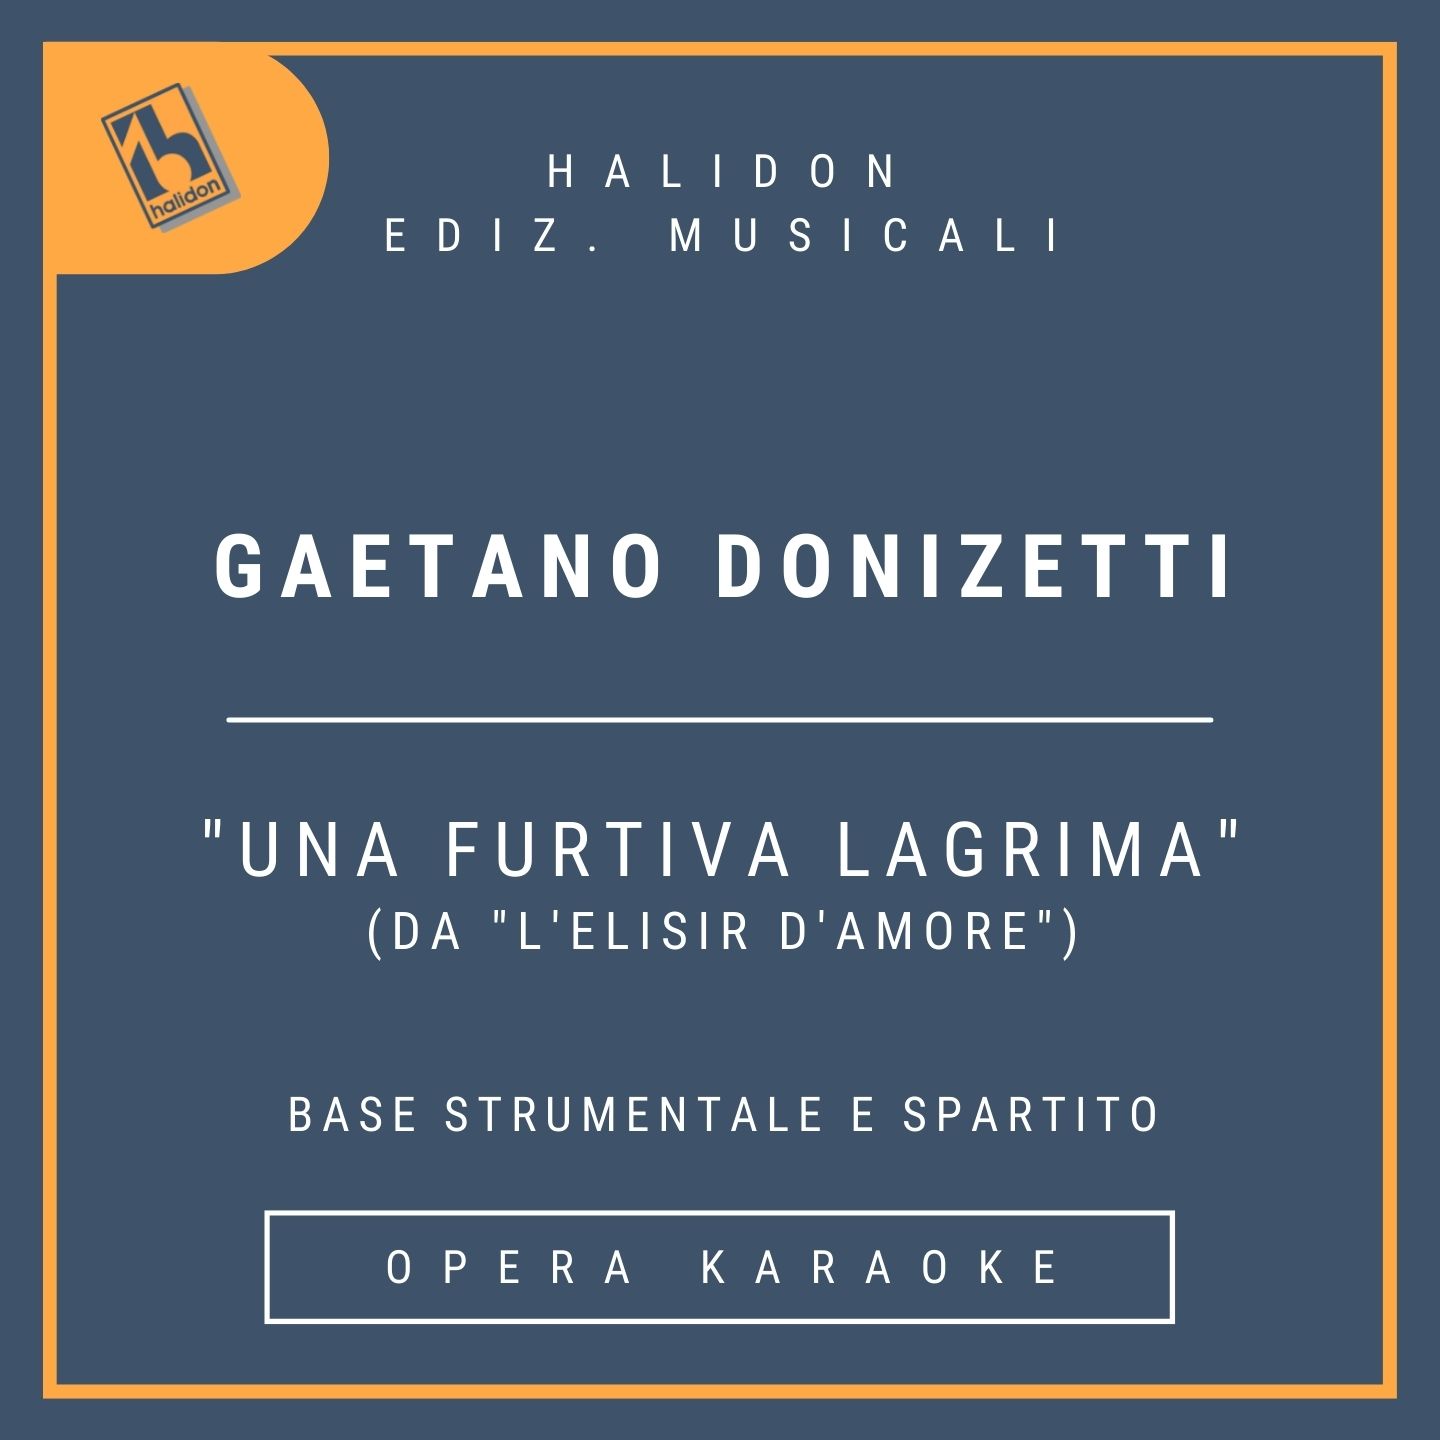 Gaetano Donizetti - Una furtiva lagrima (from 'L'elisir d'amore') - Nemorino's Aria (tenor) - Instrumental track (original tone and transposed) + sheet 